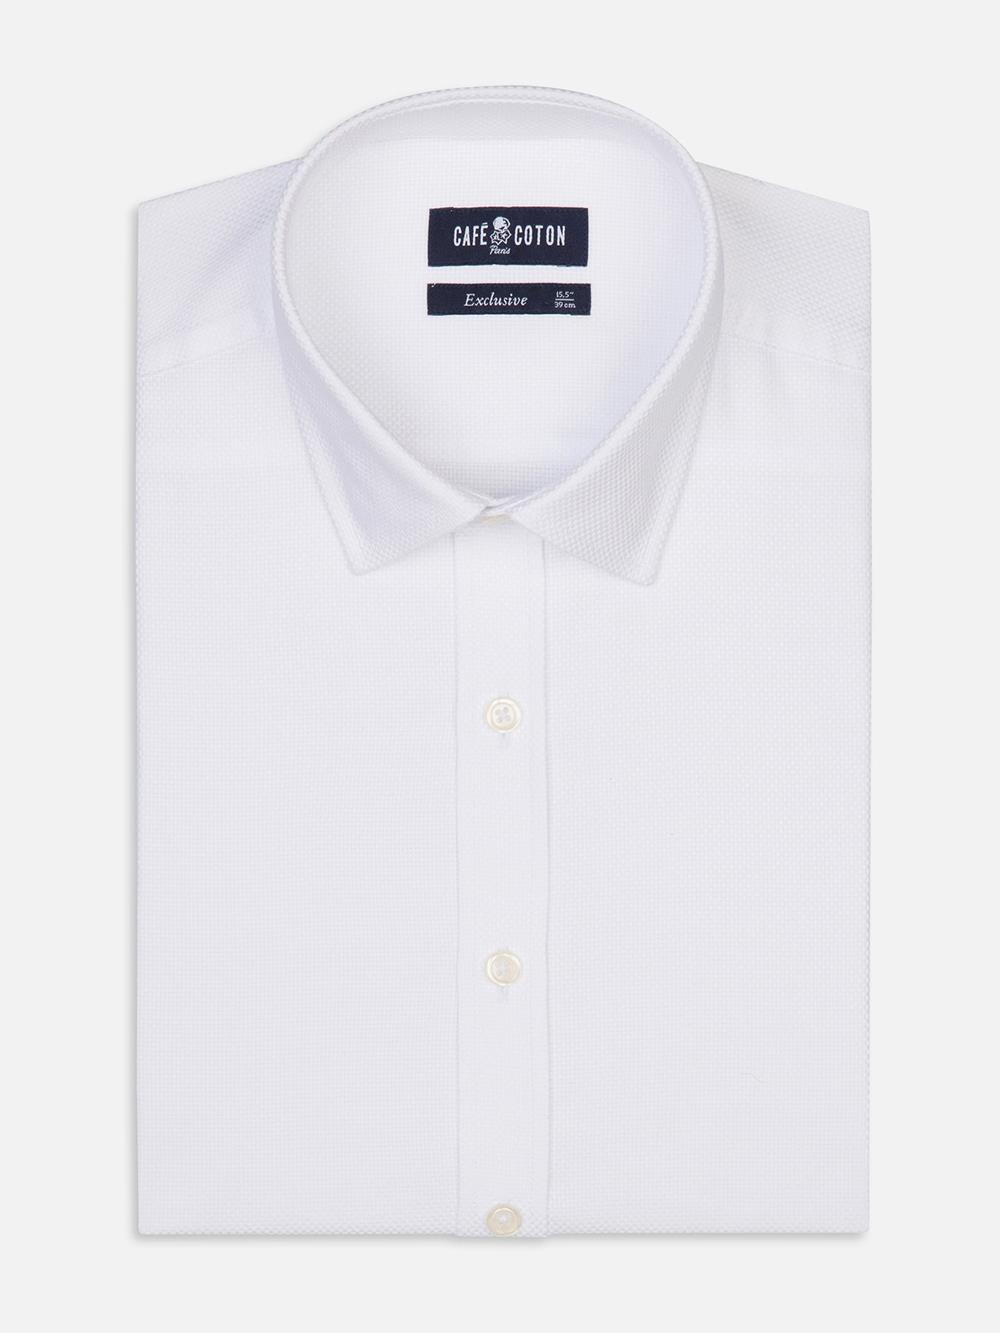 Smith shirt in white Natté